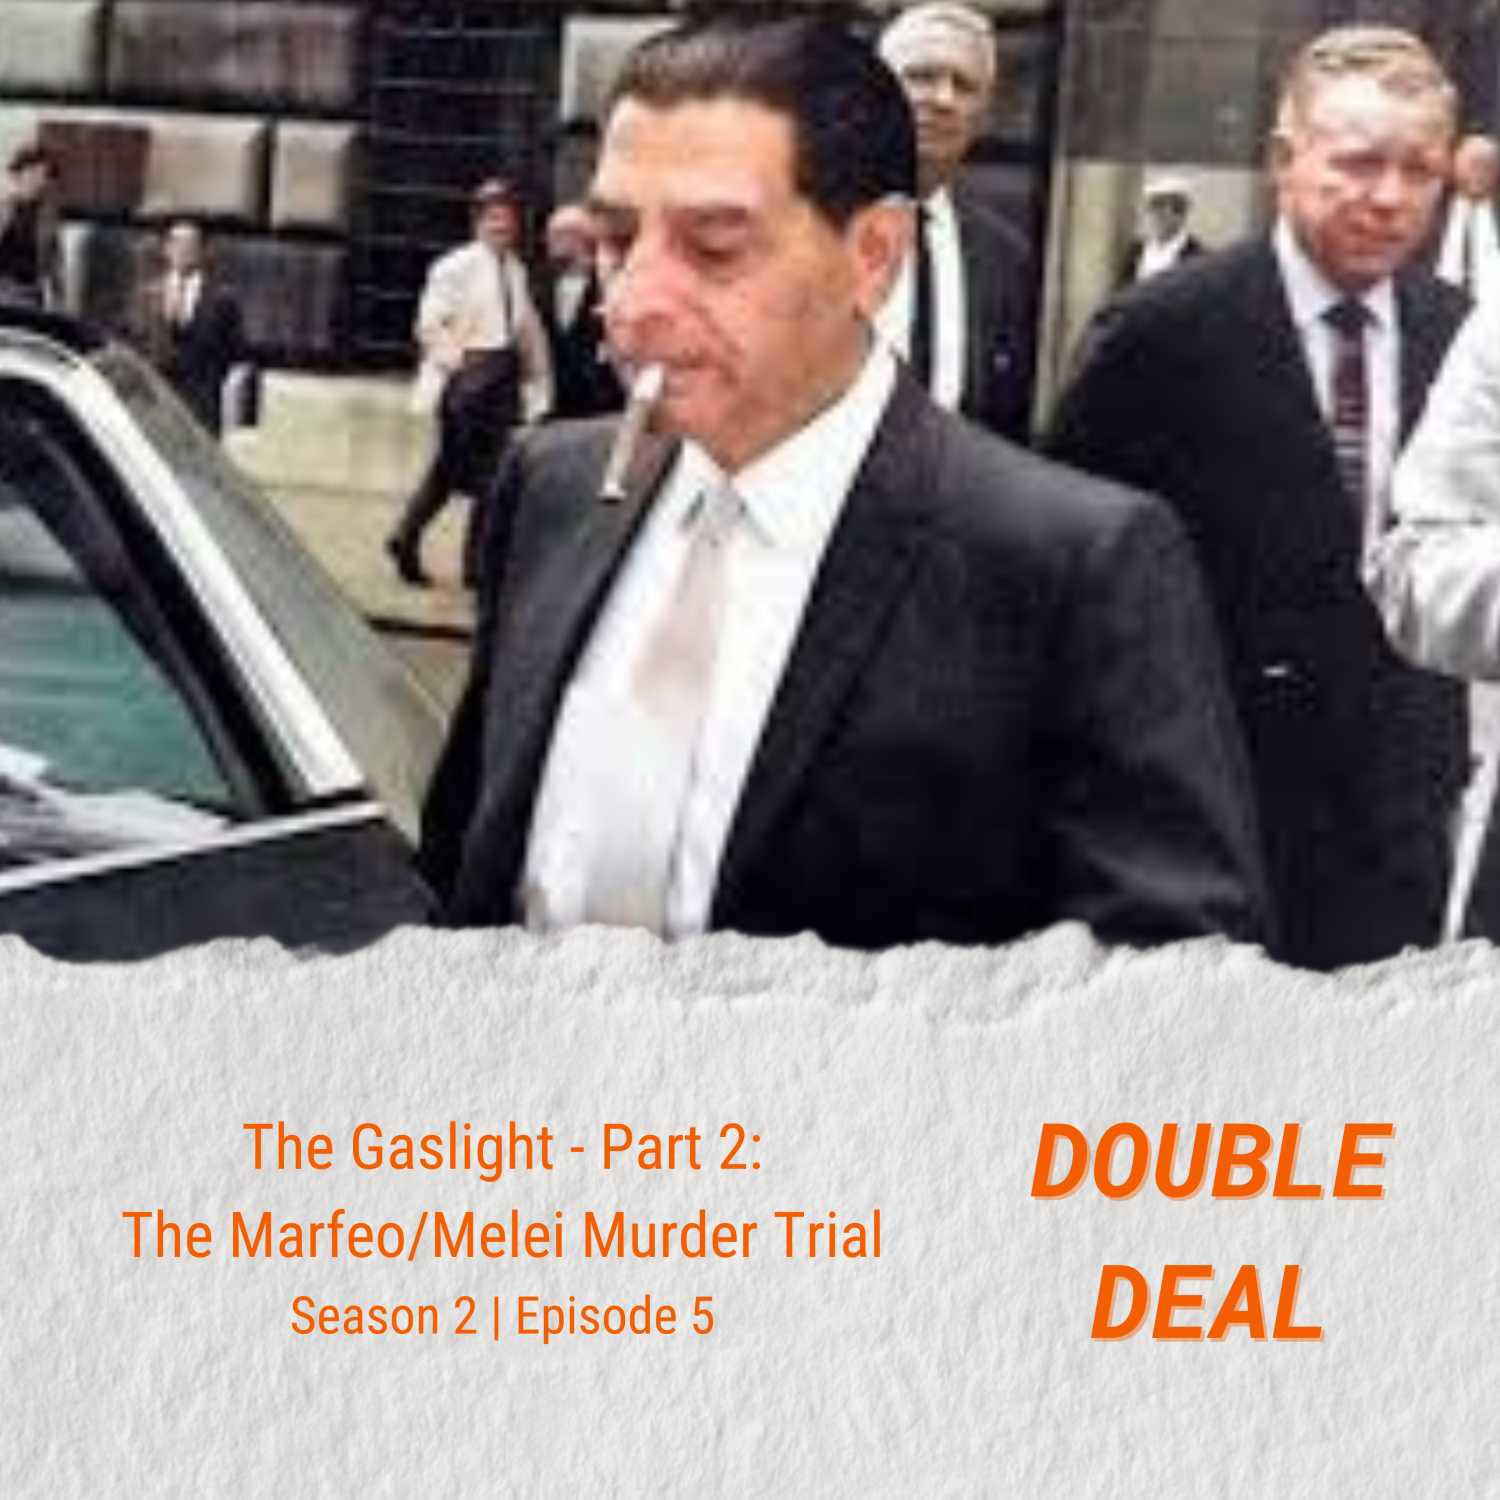 The Gaslight - Part 2: The Marfeo/Melei Murder Trial